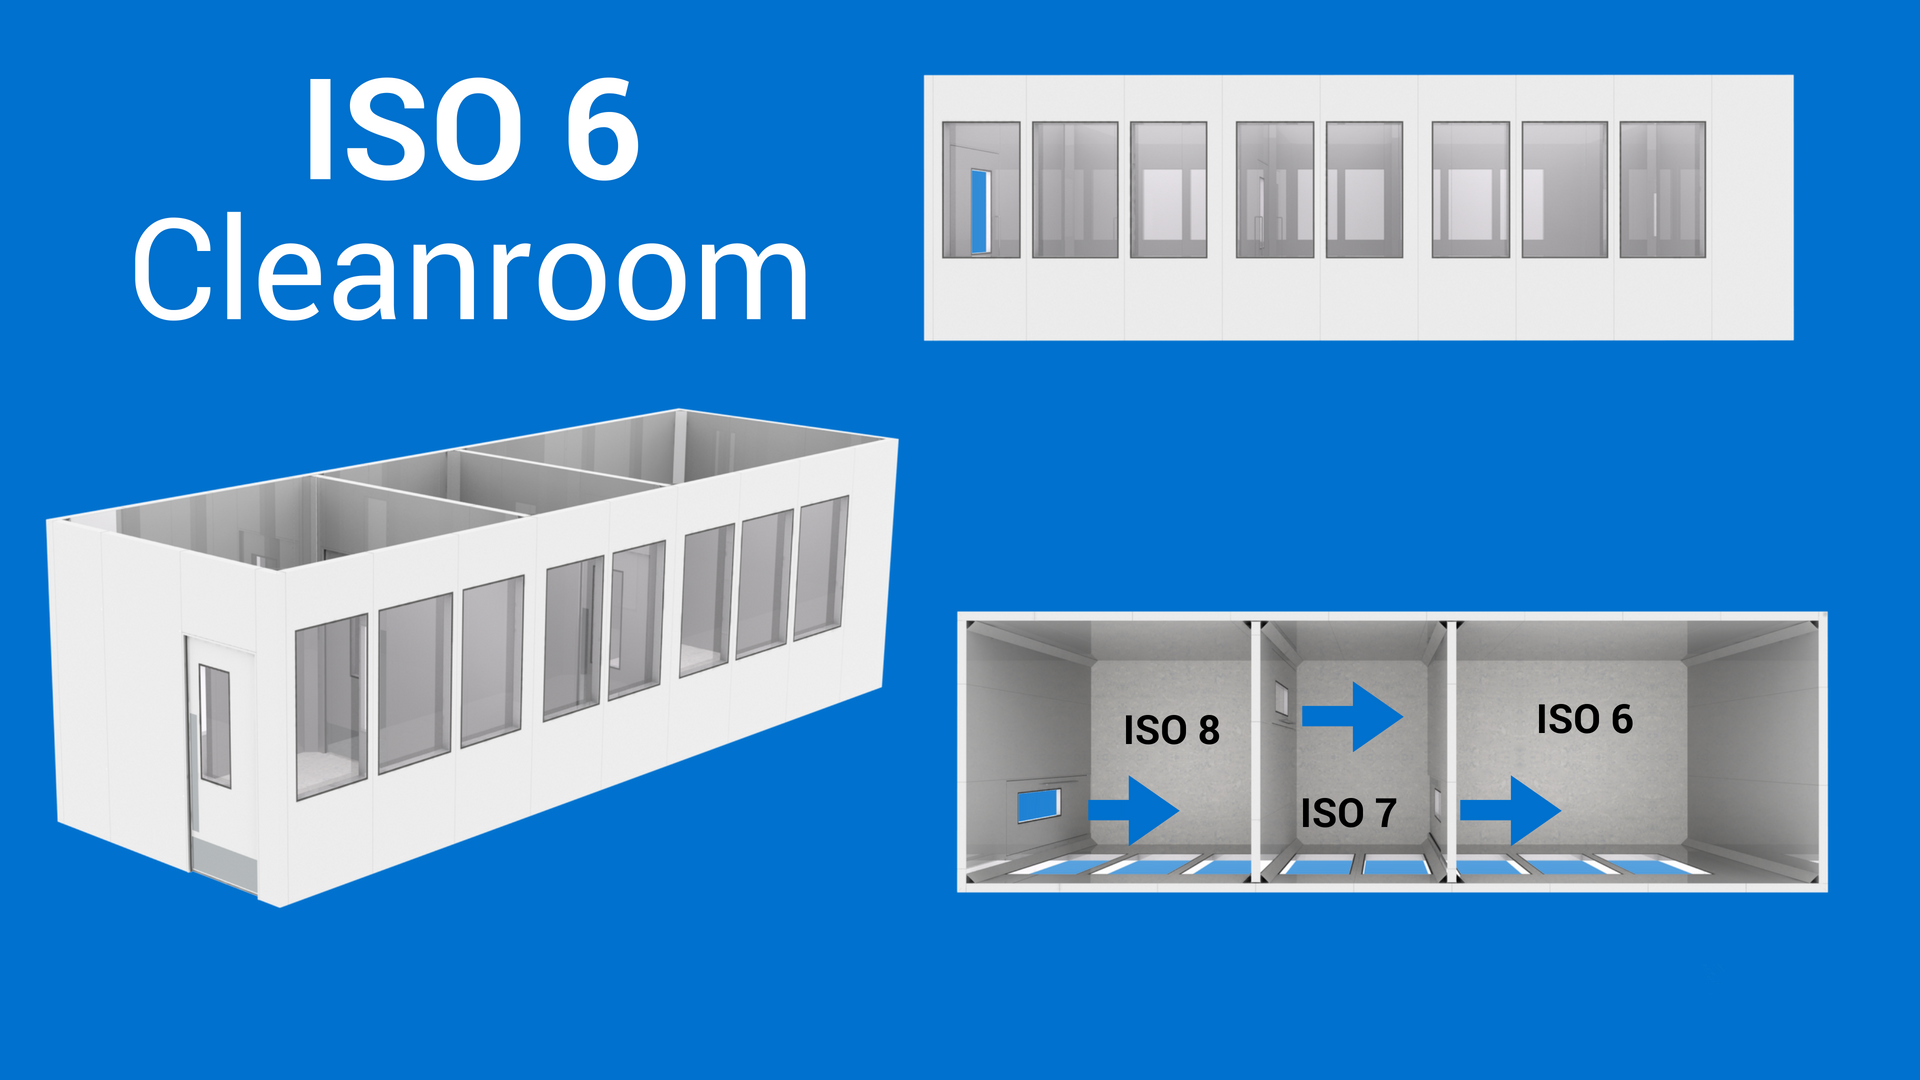 ISO 6 cleanroom